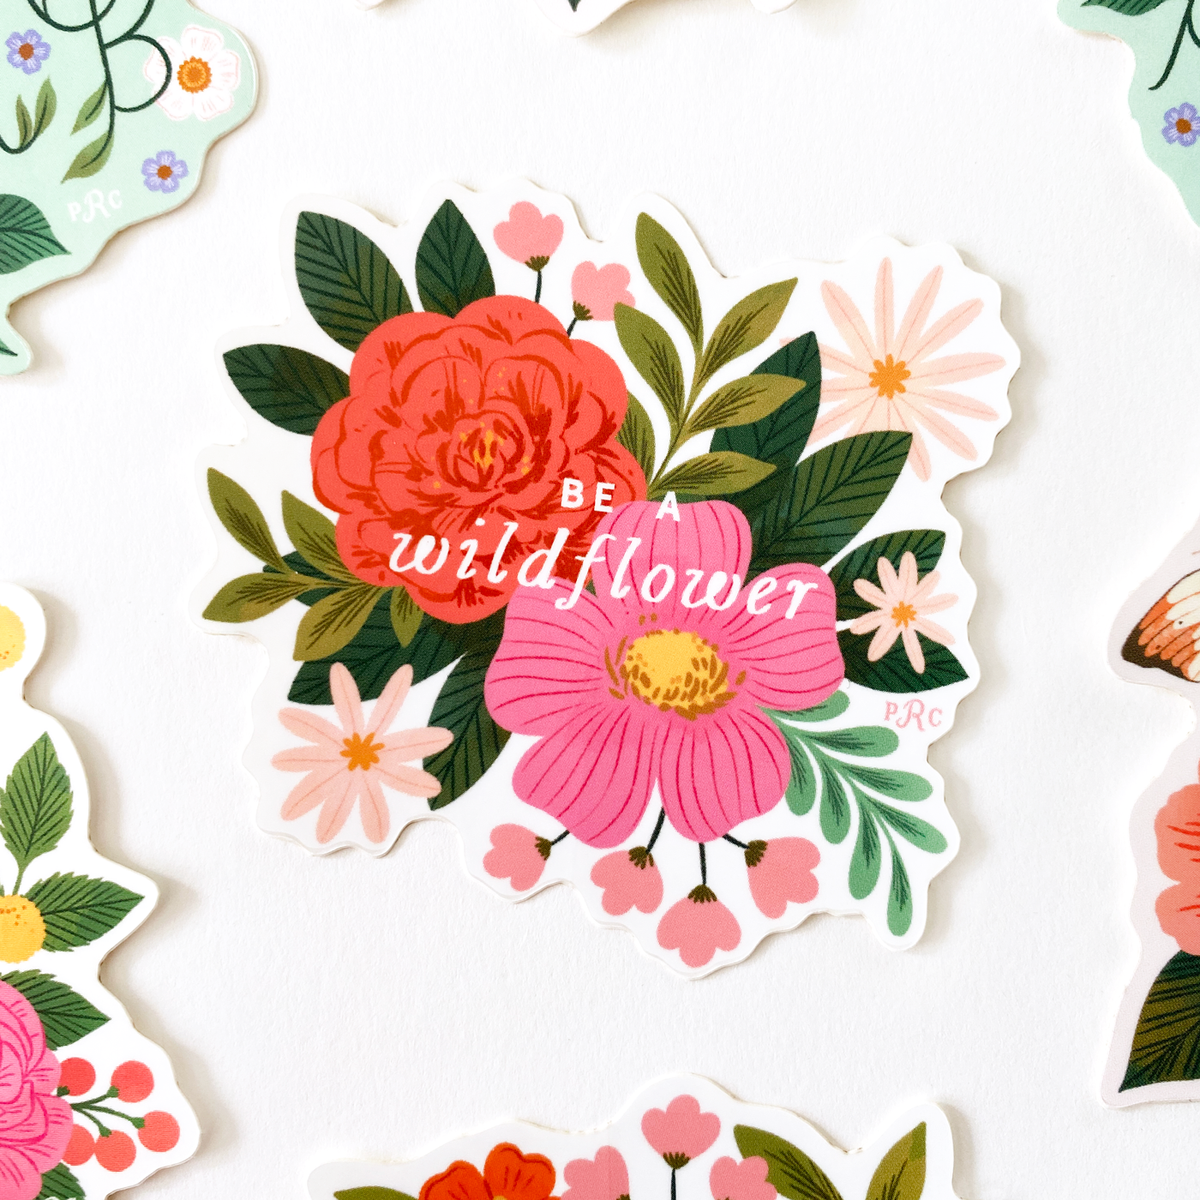 NEW! Be A Wildflower Sticker